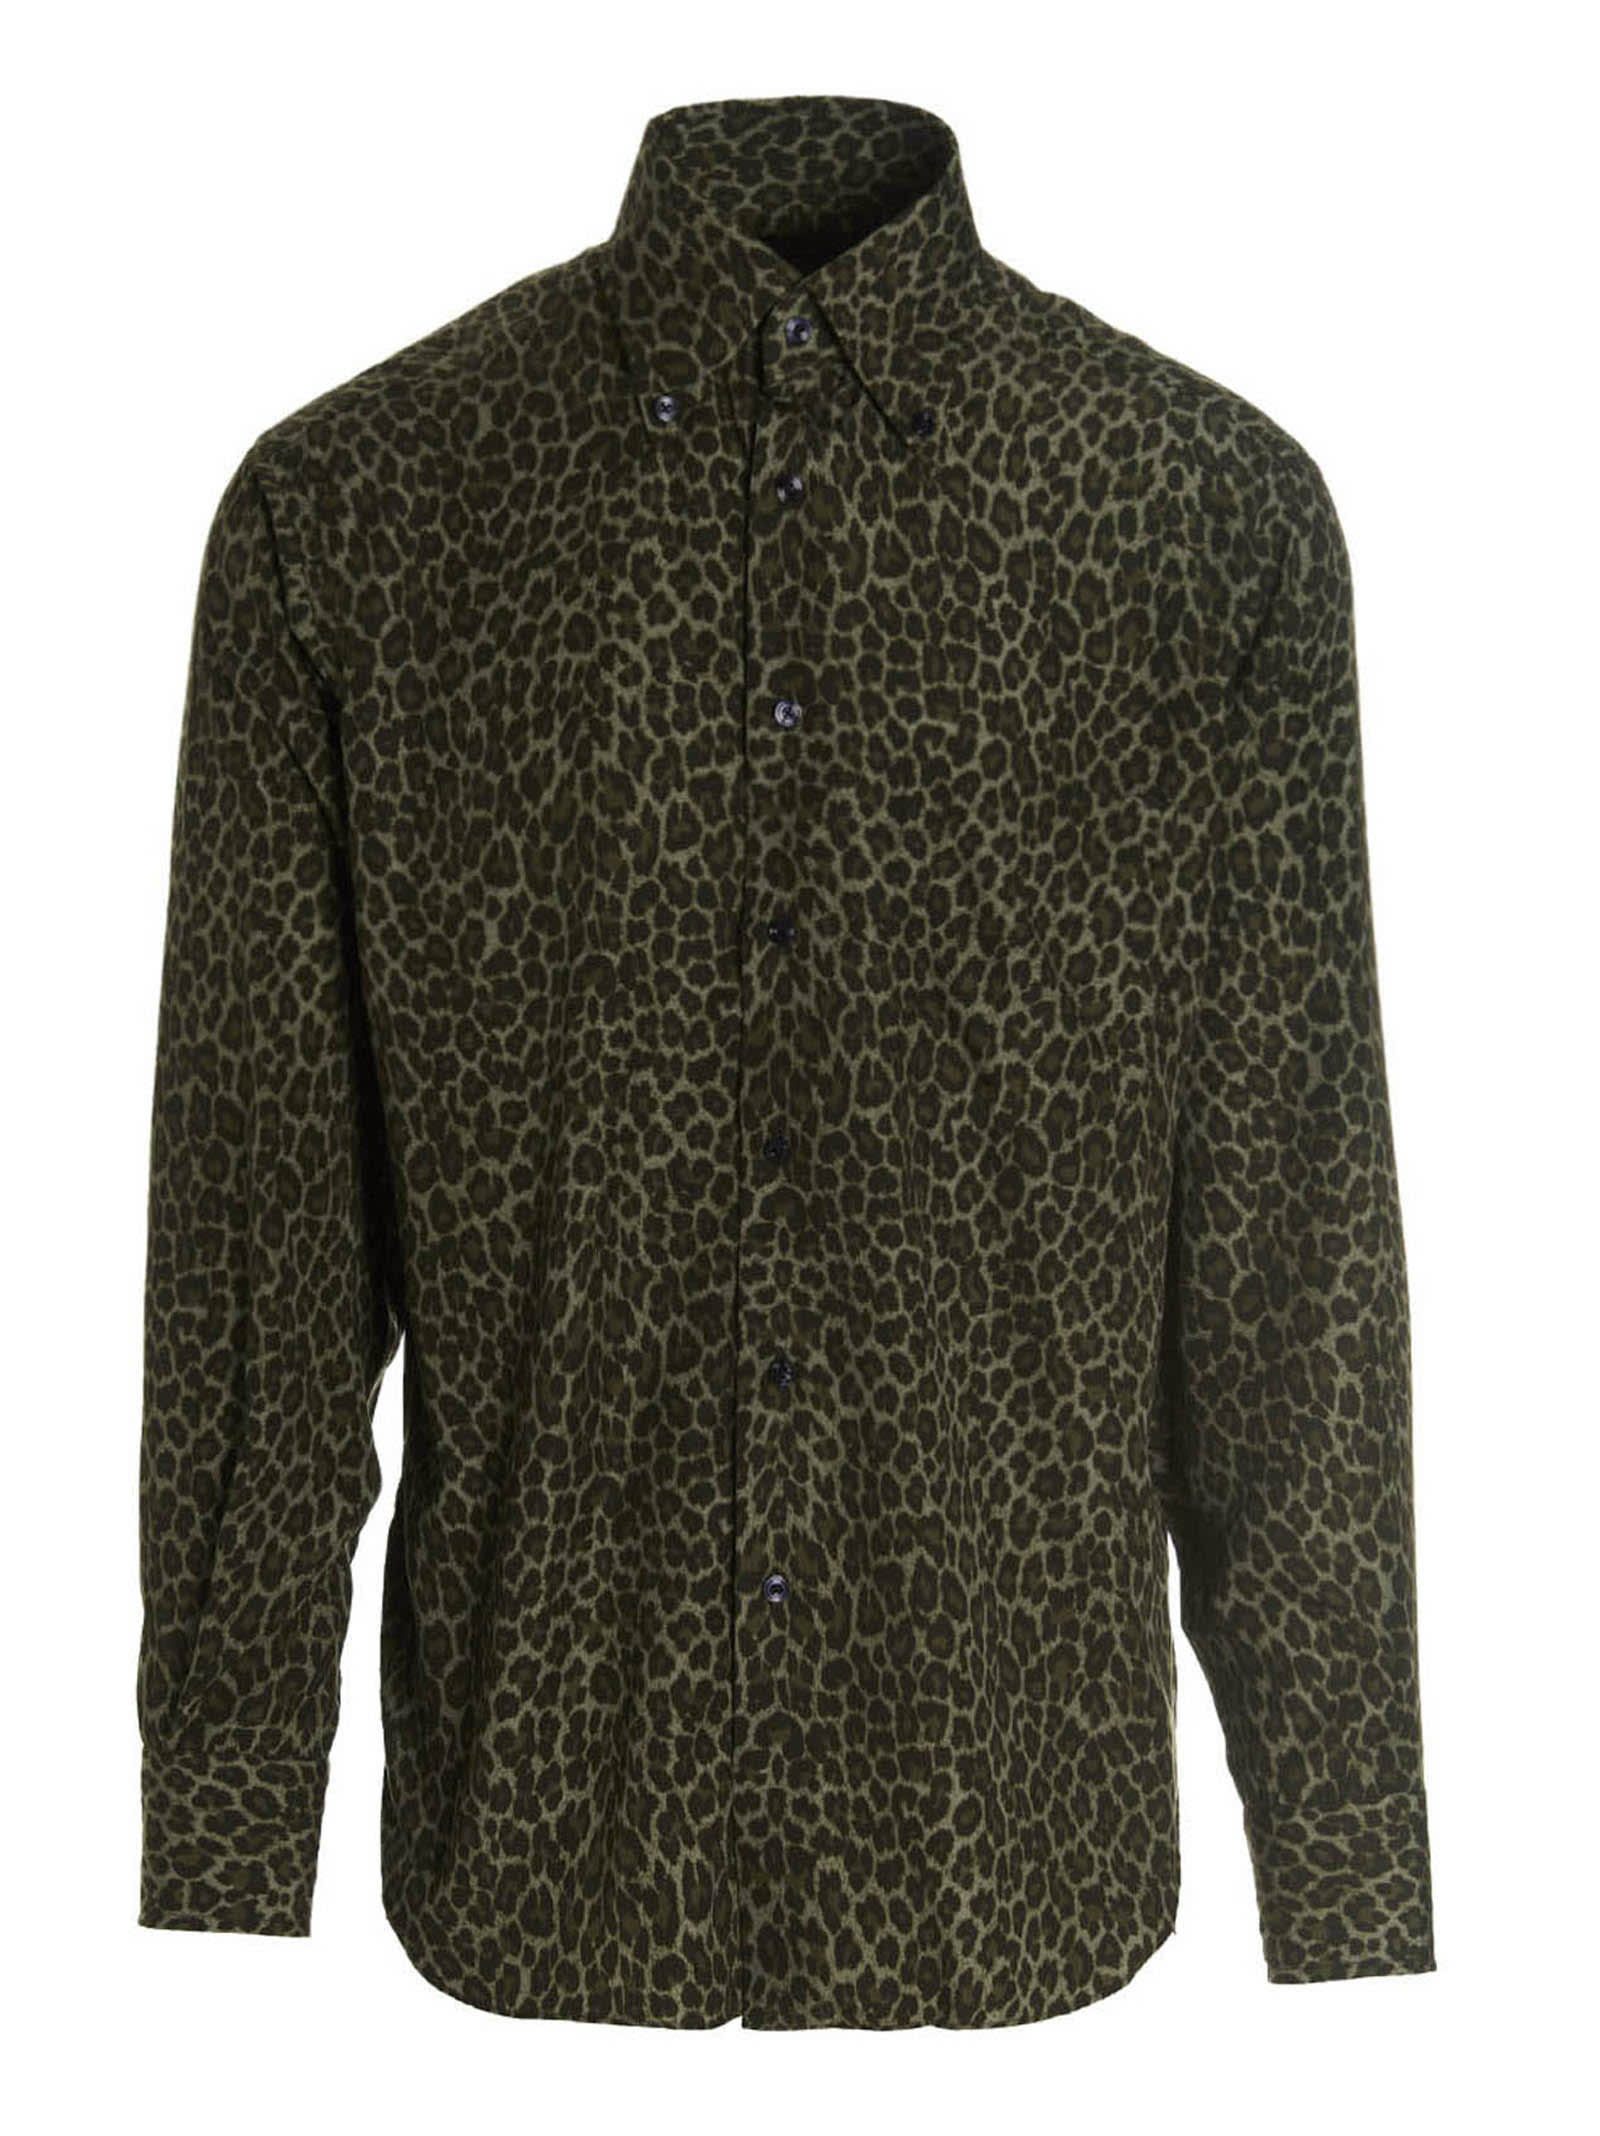 Tom Ford Leopard Shirt